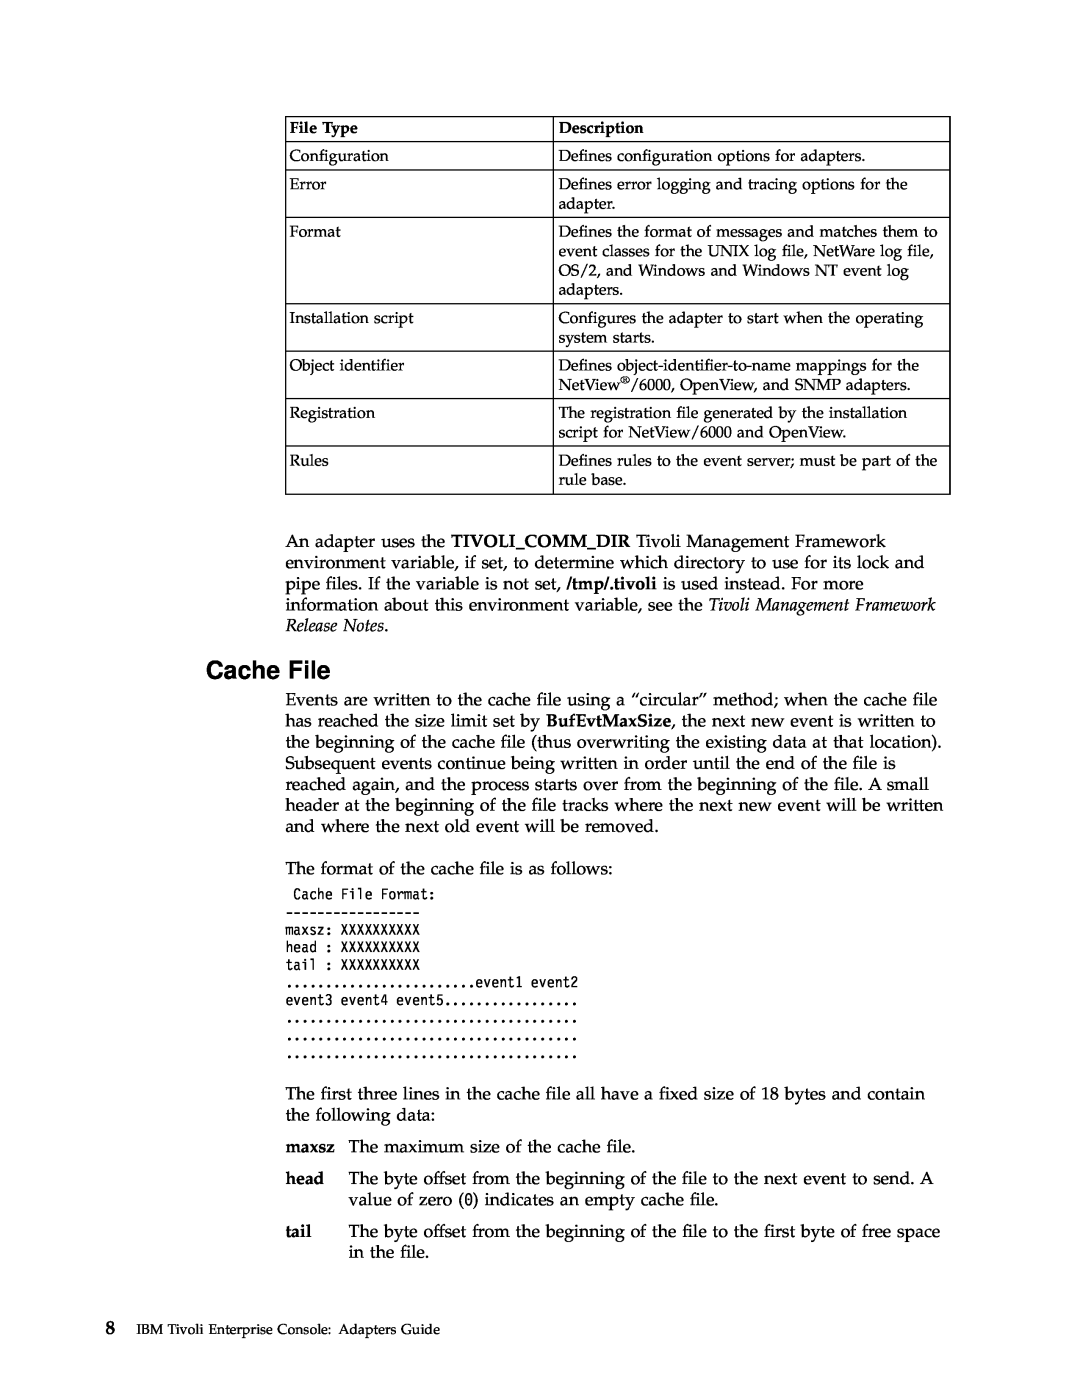 IBM Enterprise Console manual Cache File 